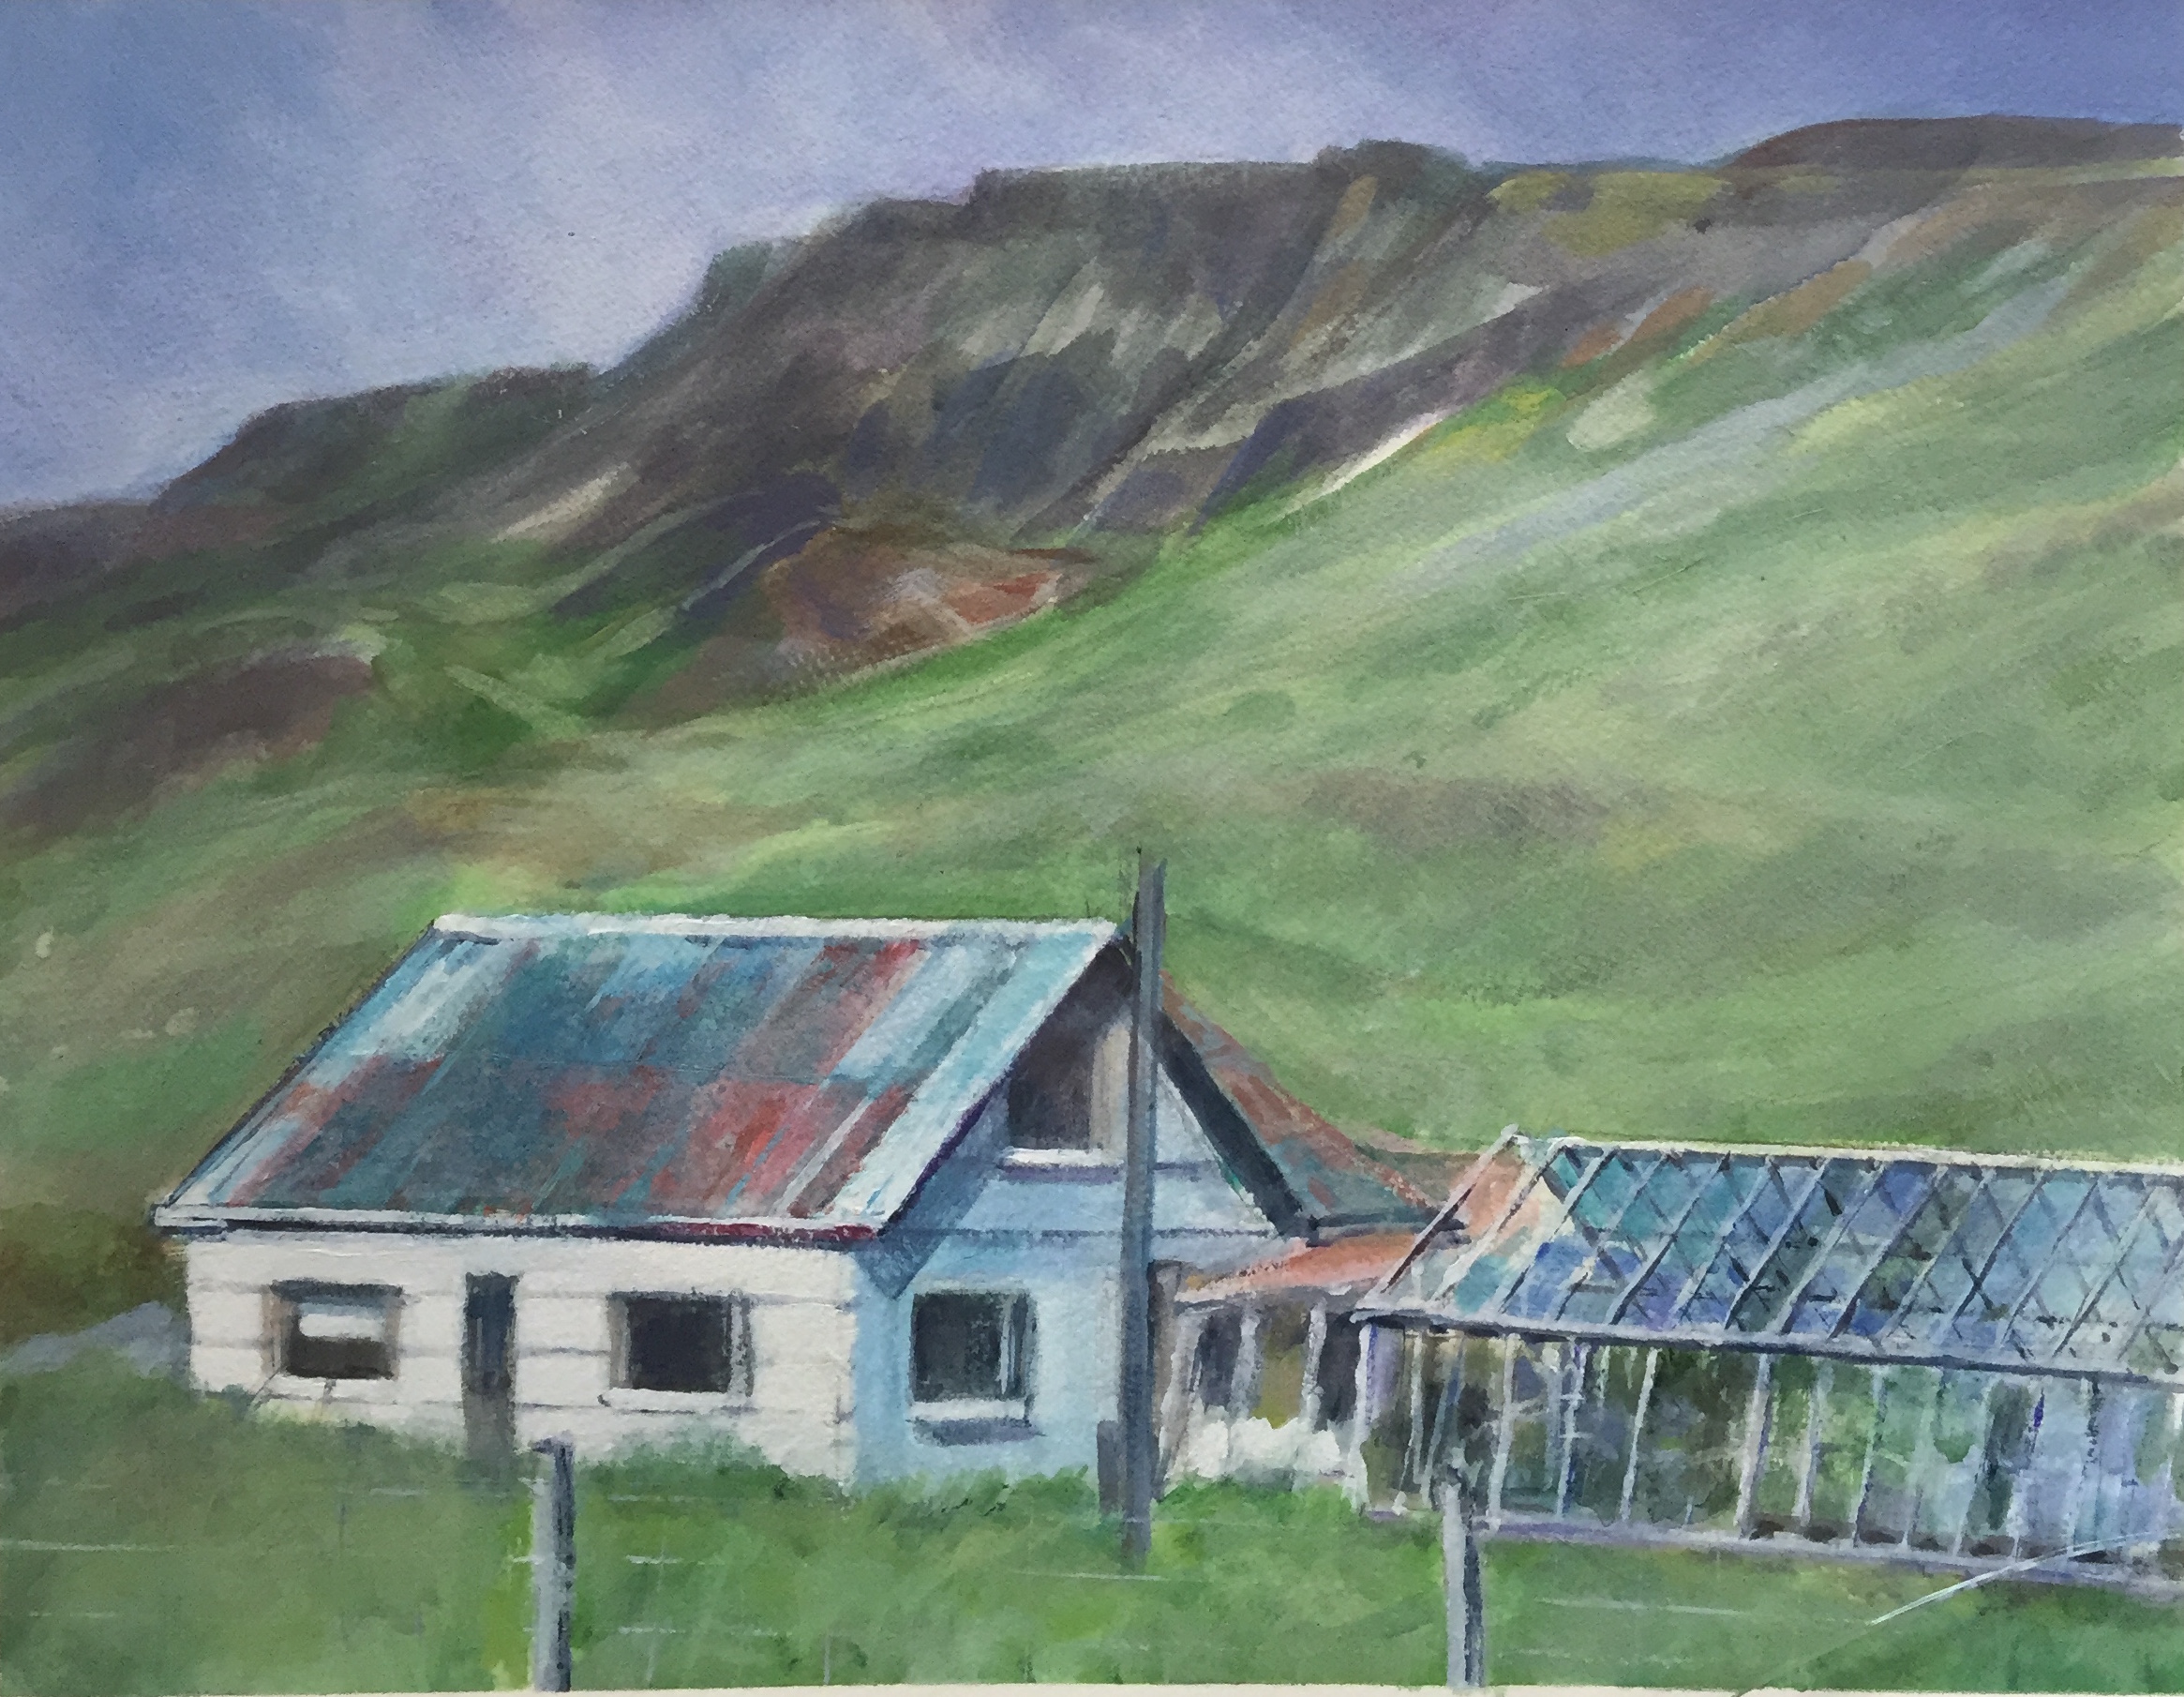 Greenhouse - Hveraderdi Iceland